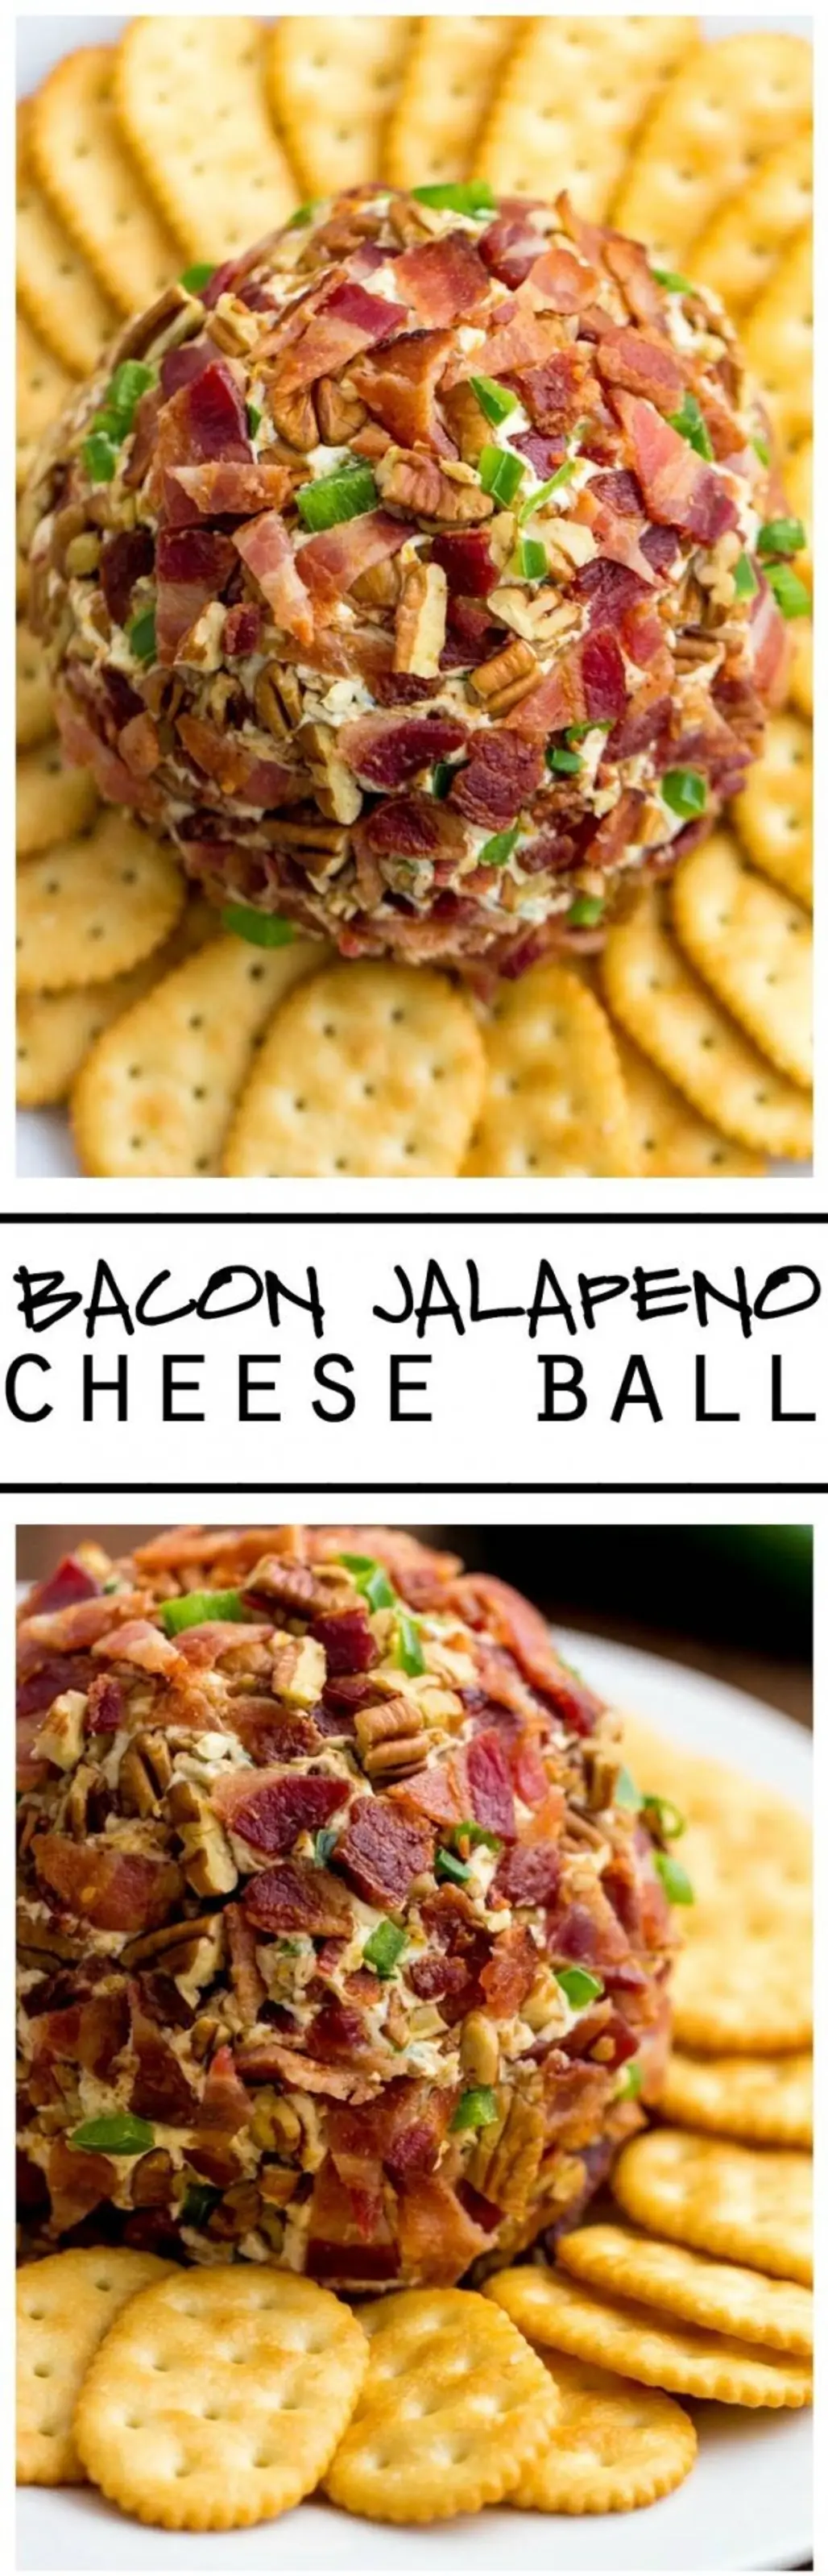 Bacon Jalapeño Cheese Ball